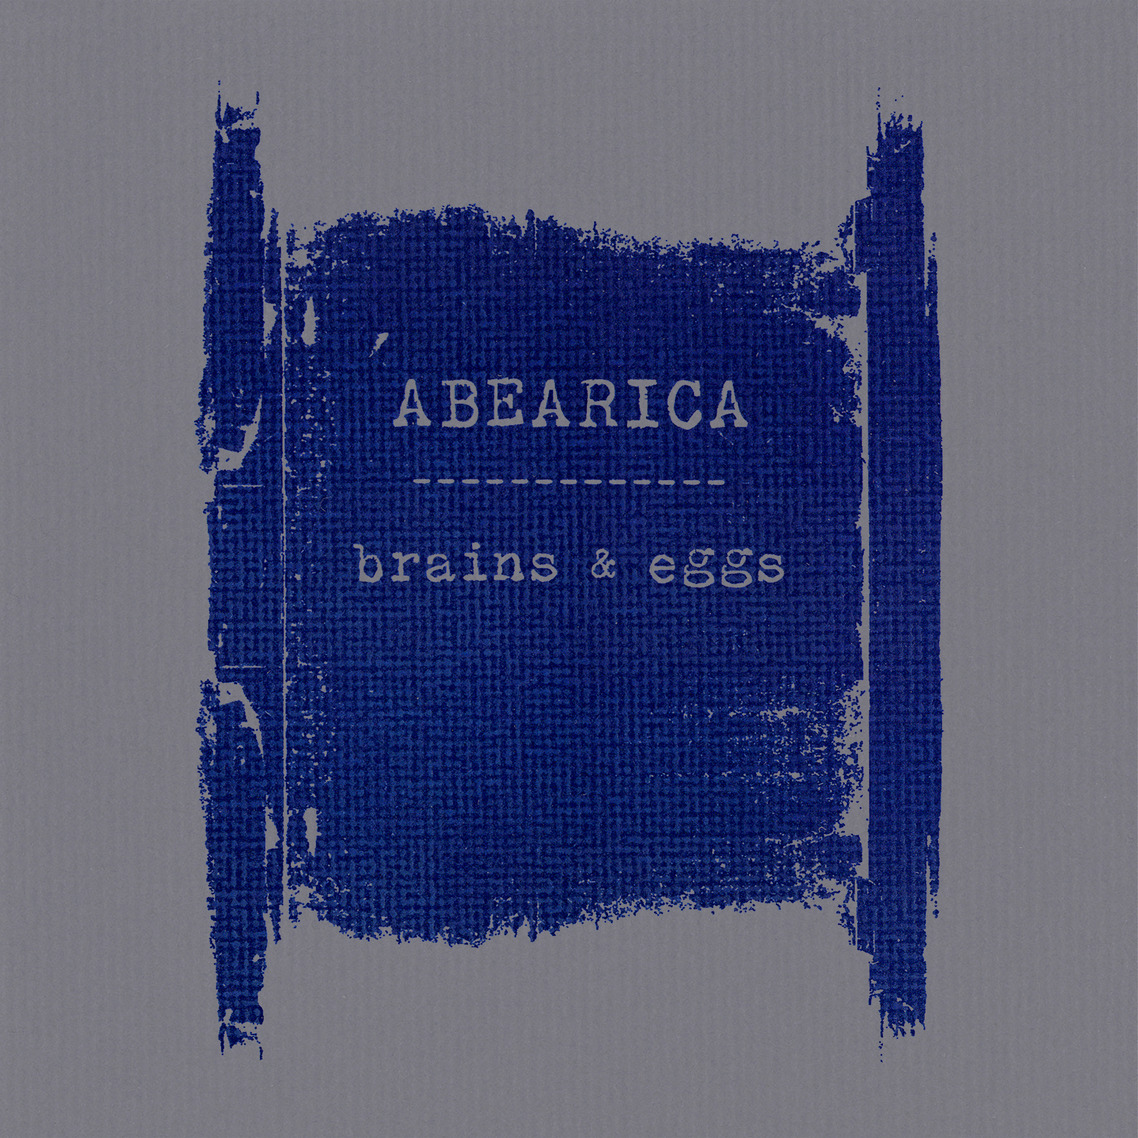 abearica - brains  eggs.jpg